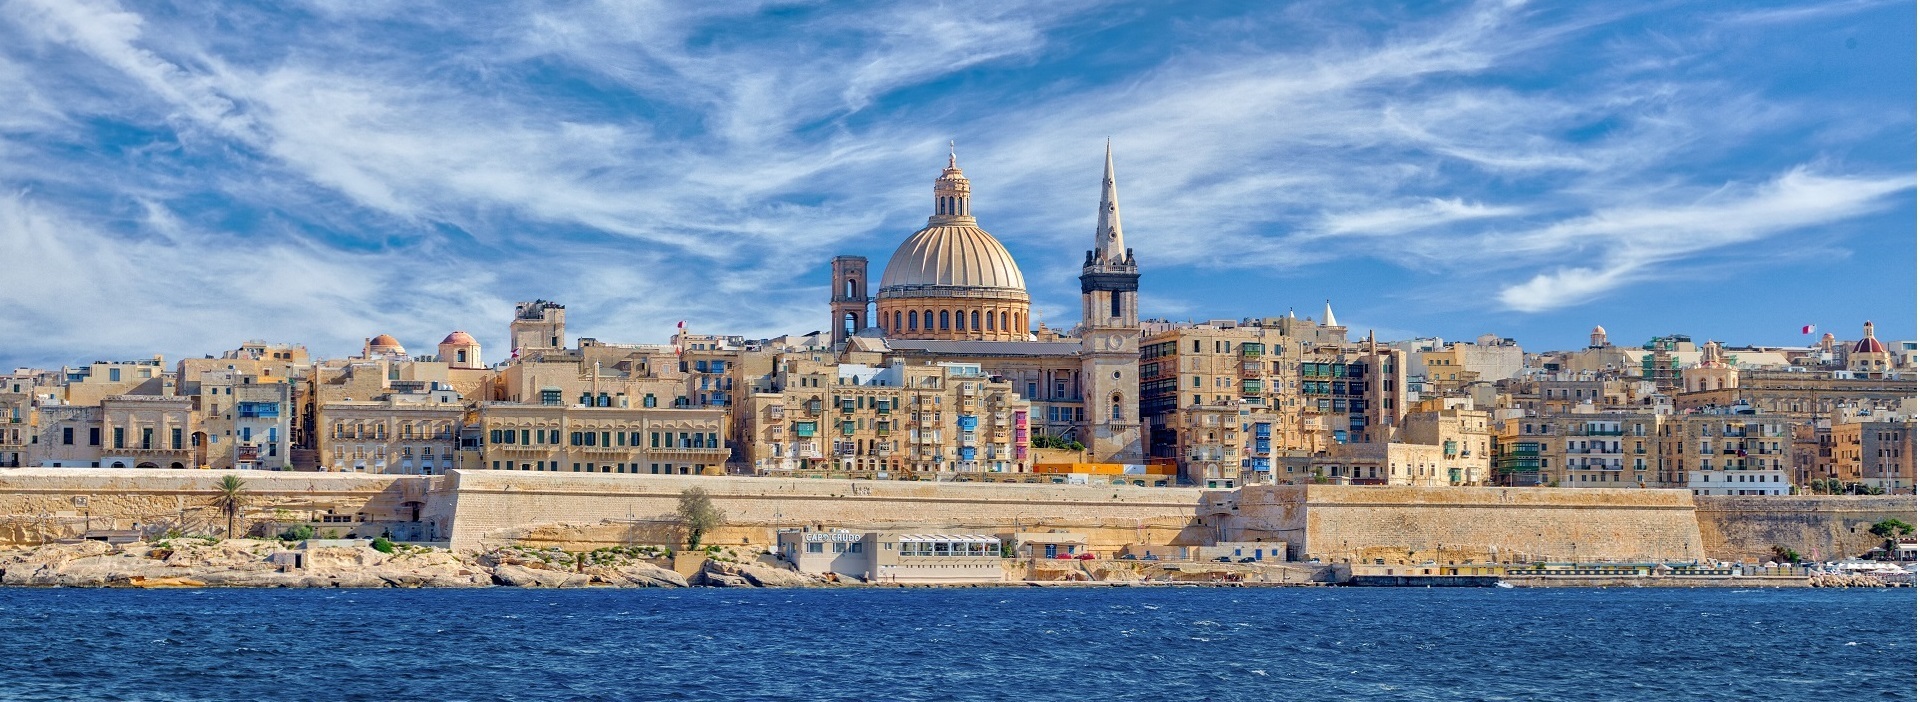 Valletta - The Capital City